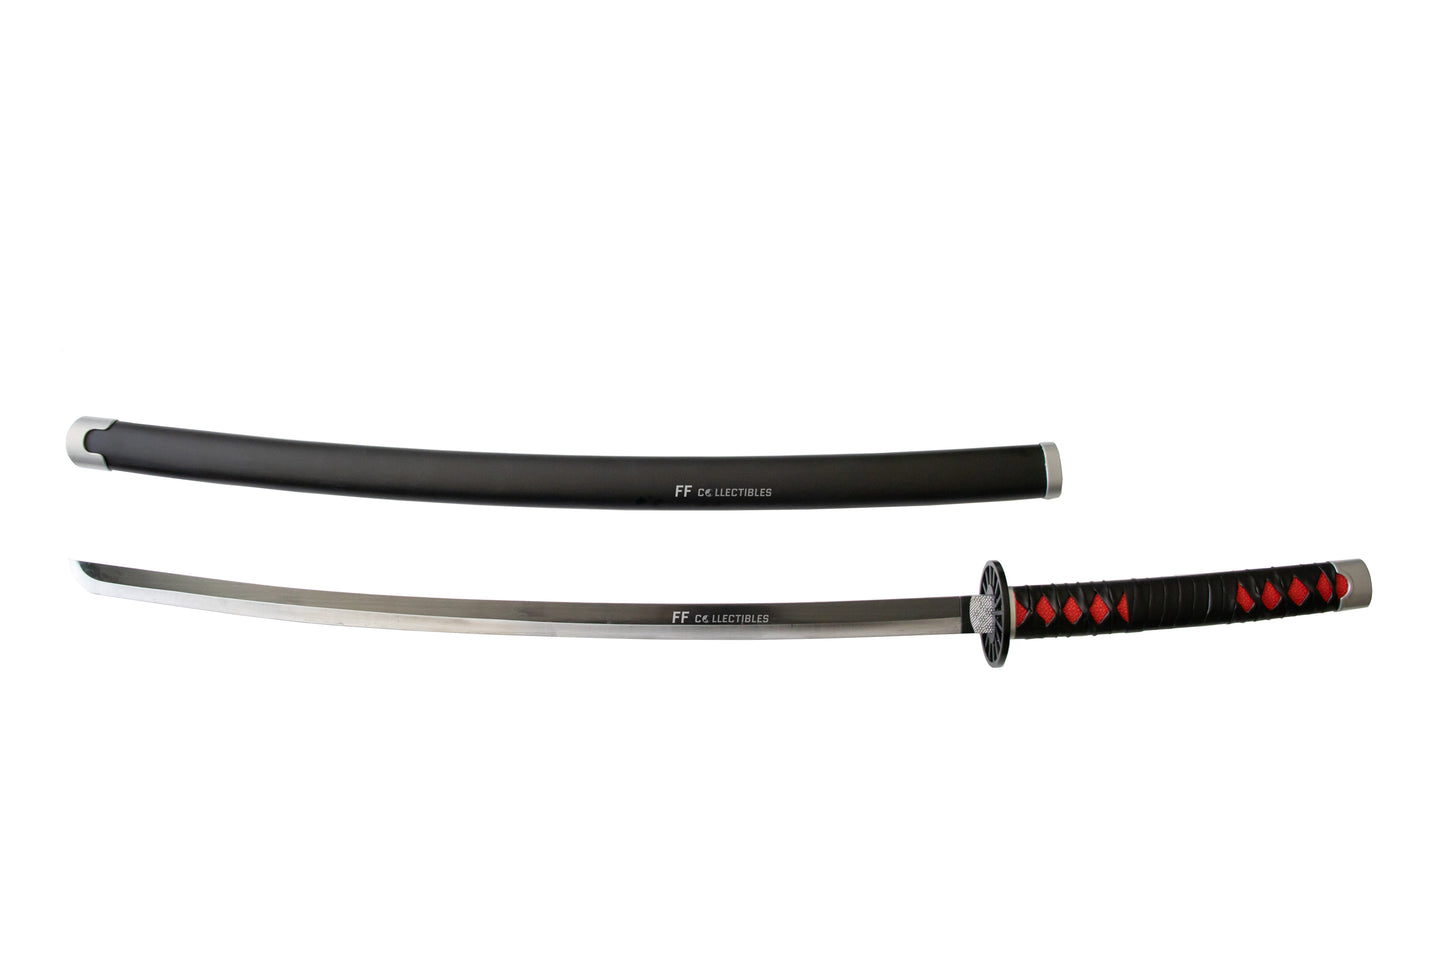 DEMON SLAYER - TANJIRO KAMADO'S NICHIRIN SWORD (with FREE sword stand)